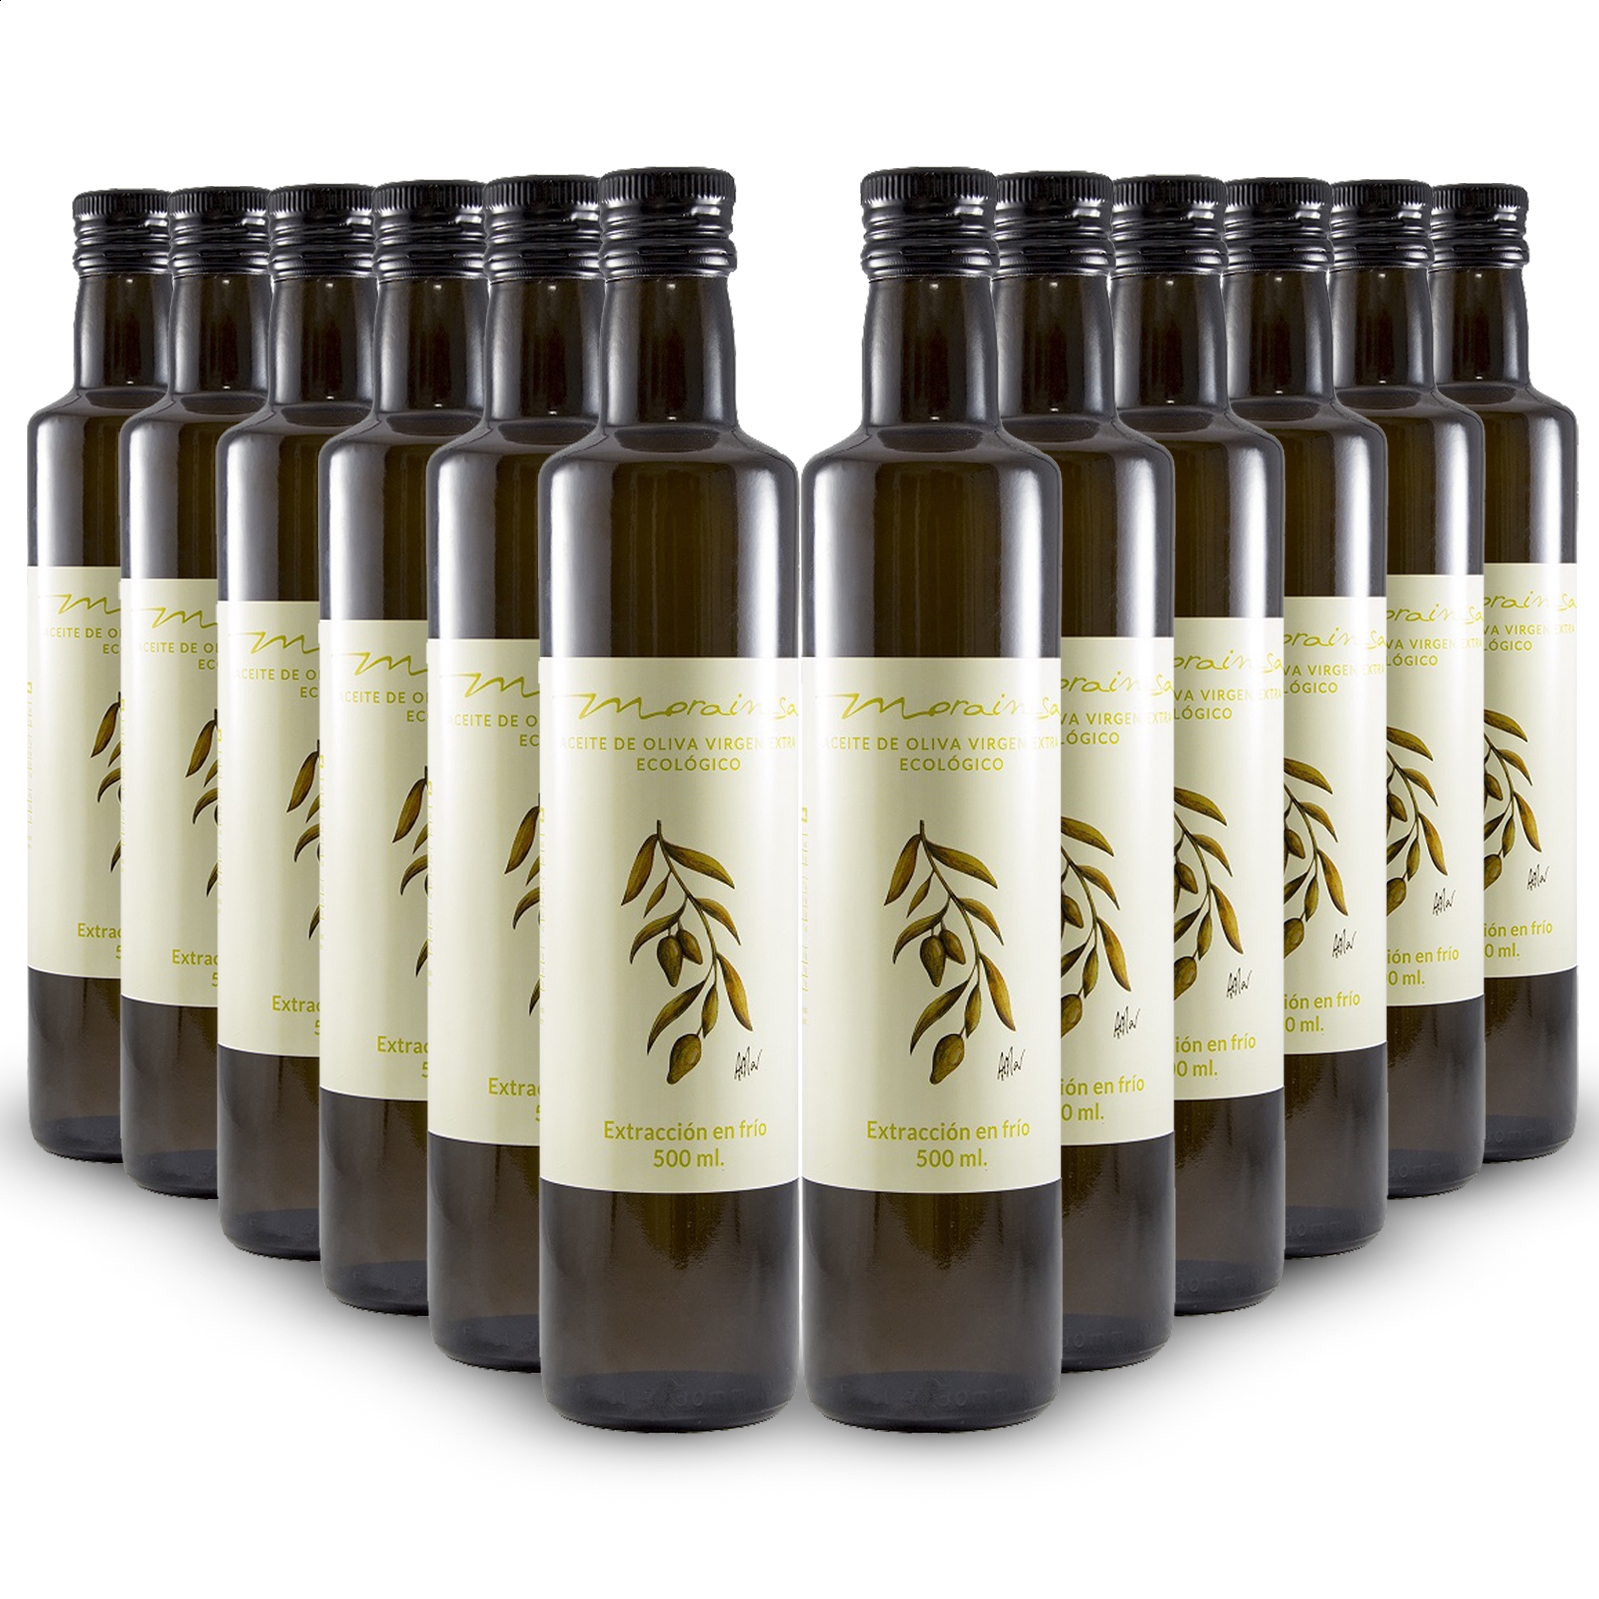 Morainsa - Aceite de oliva extra virgen ecológico 500ml, 12uds